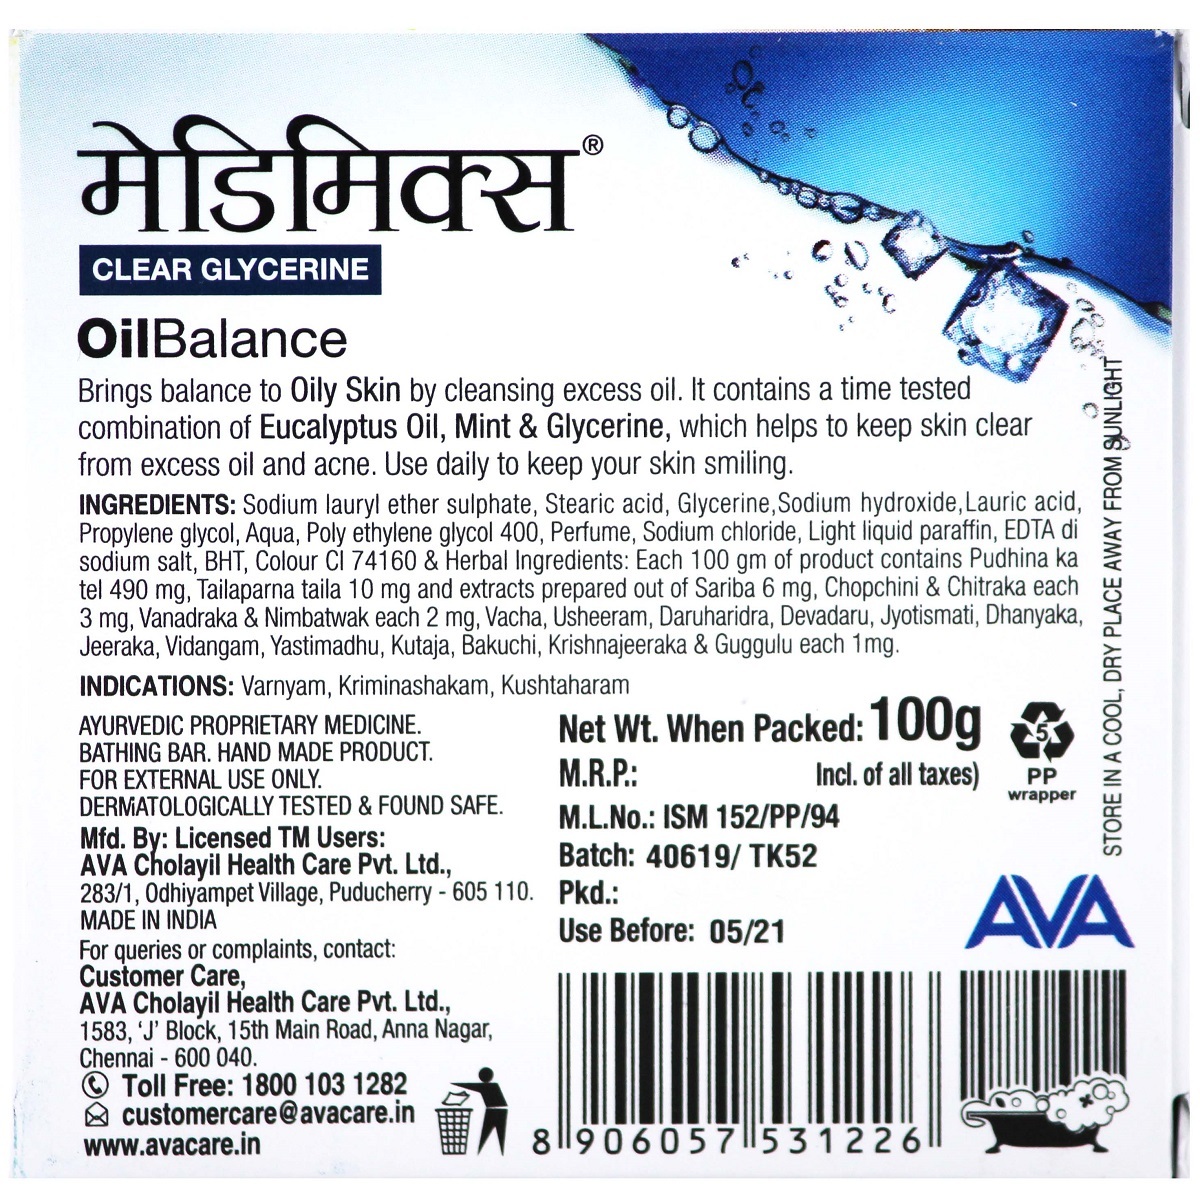 MediMix Soap Clear Glycerine Oil Balance 100g